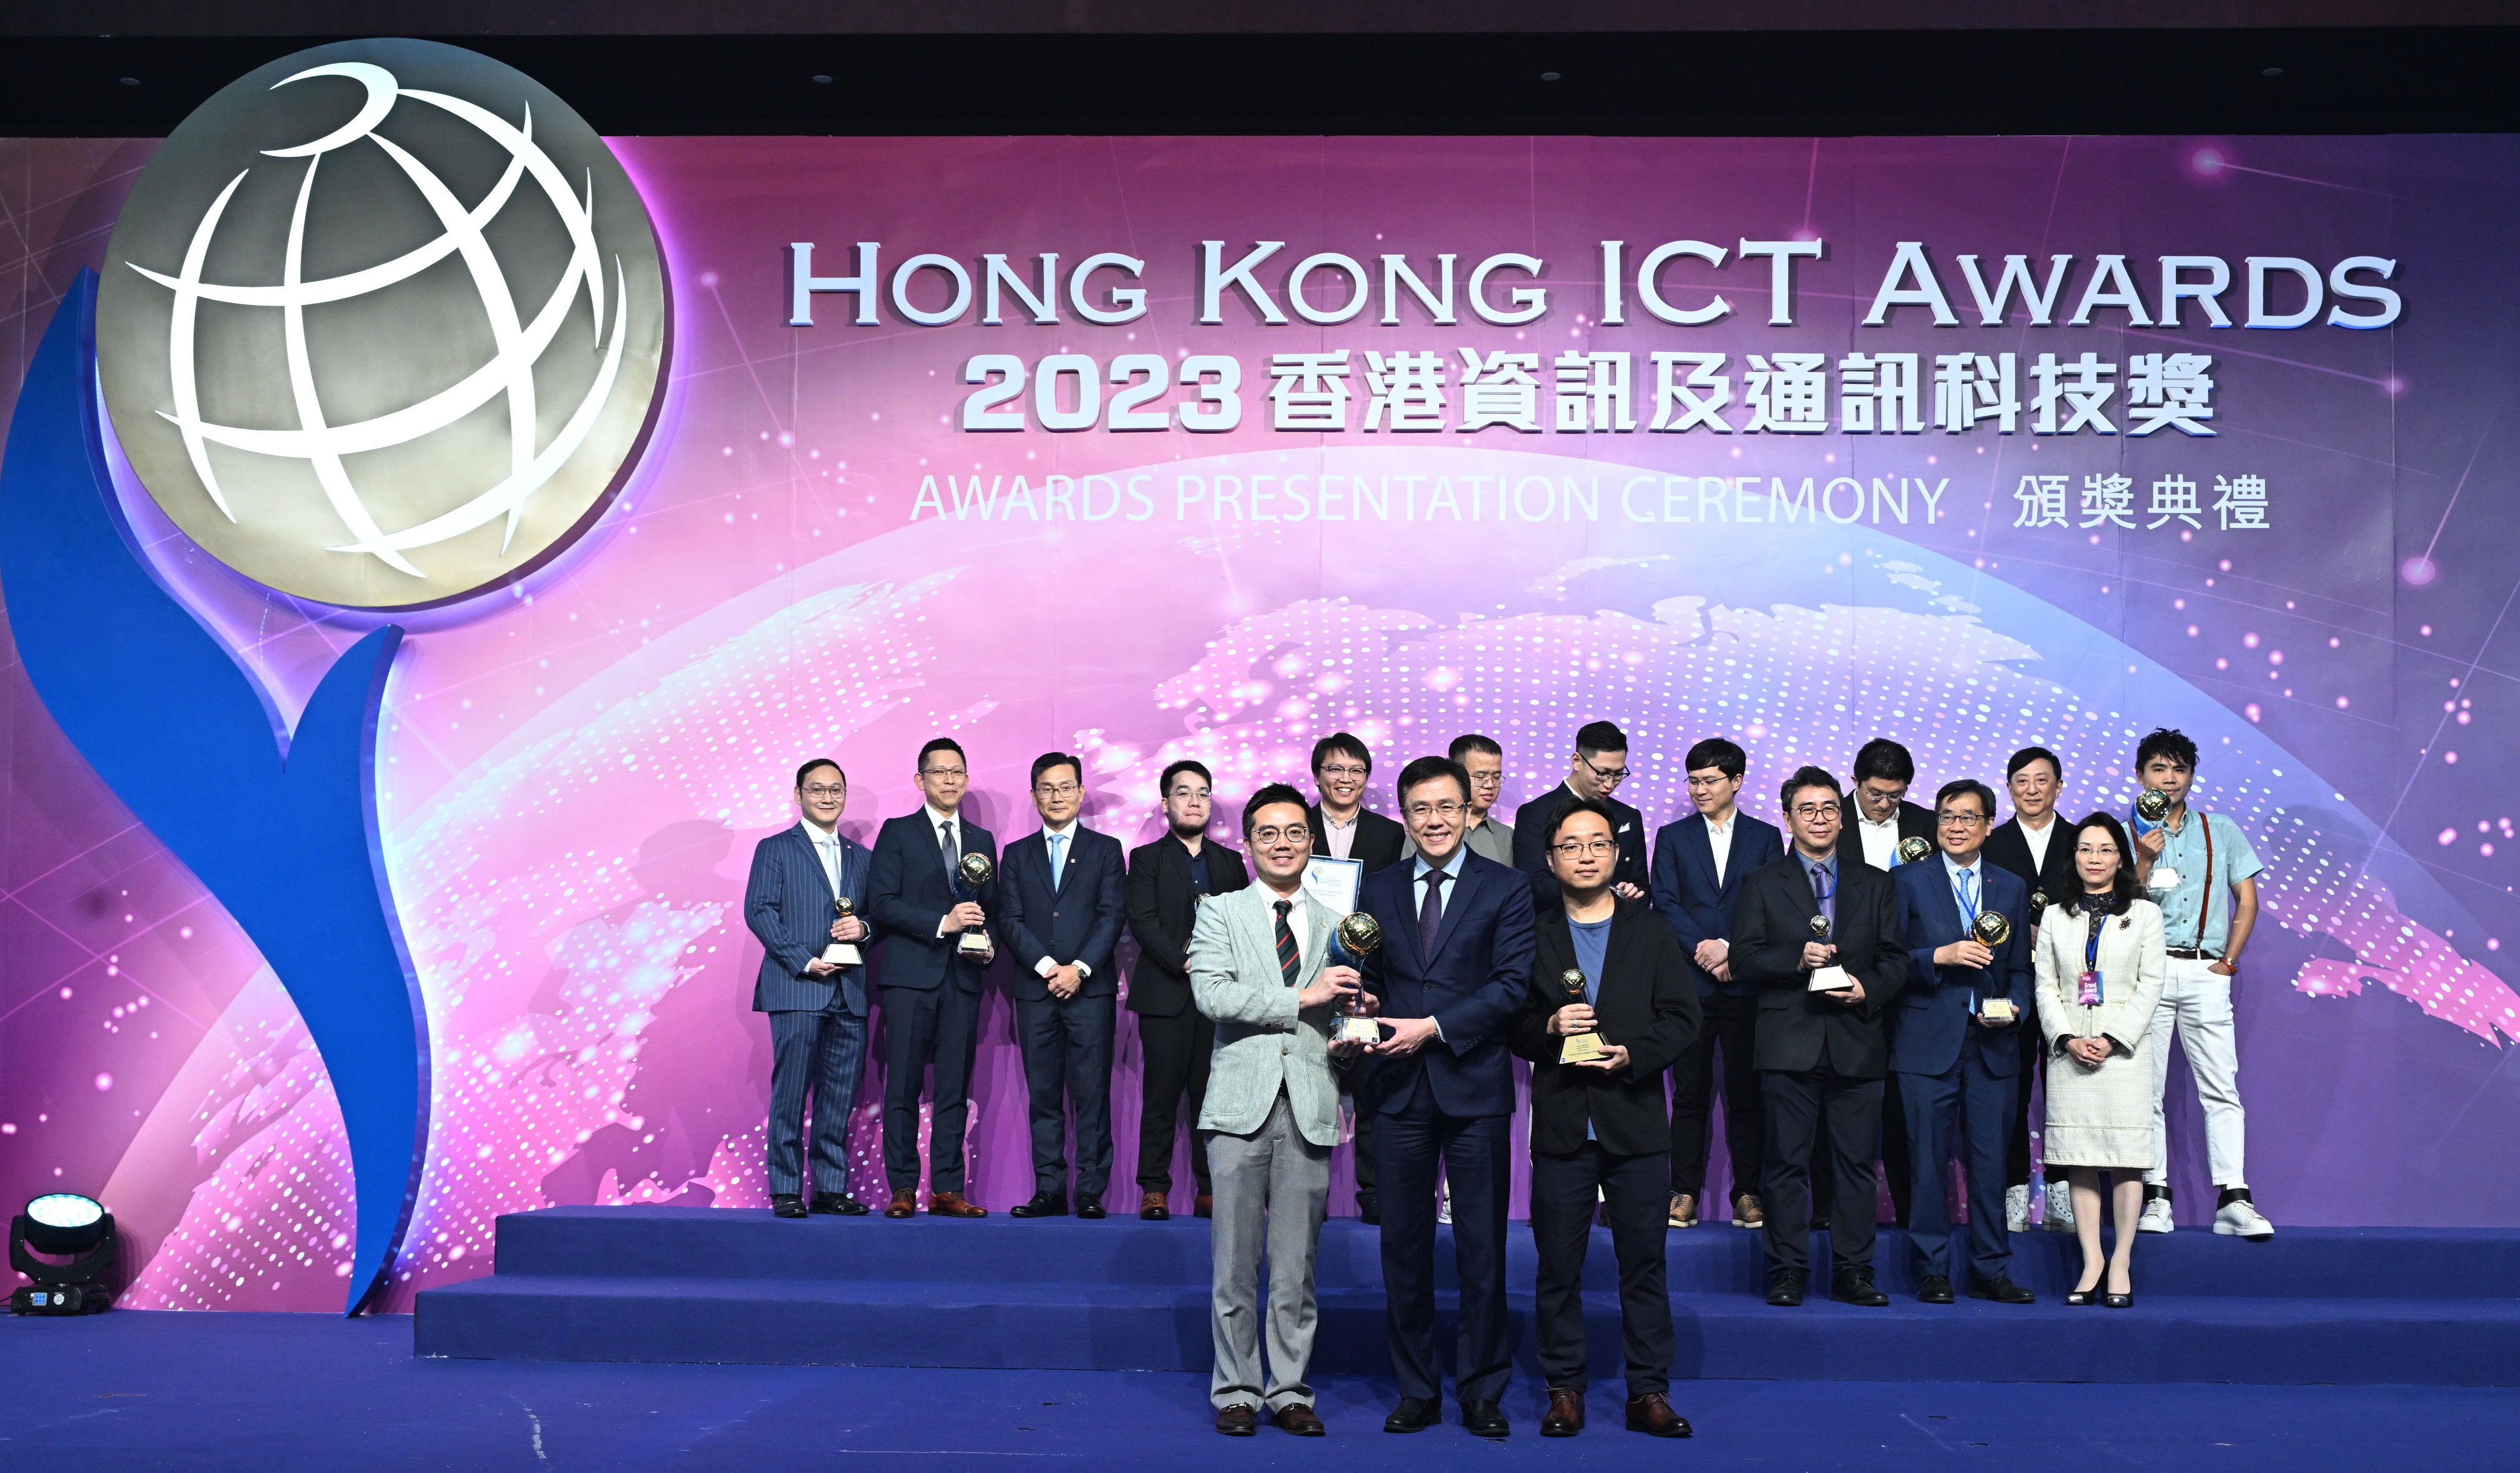 Hong Kong ICT Awards 2023 Smart Mobility Grand Award Winner